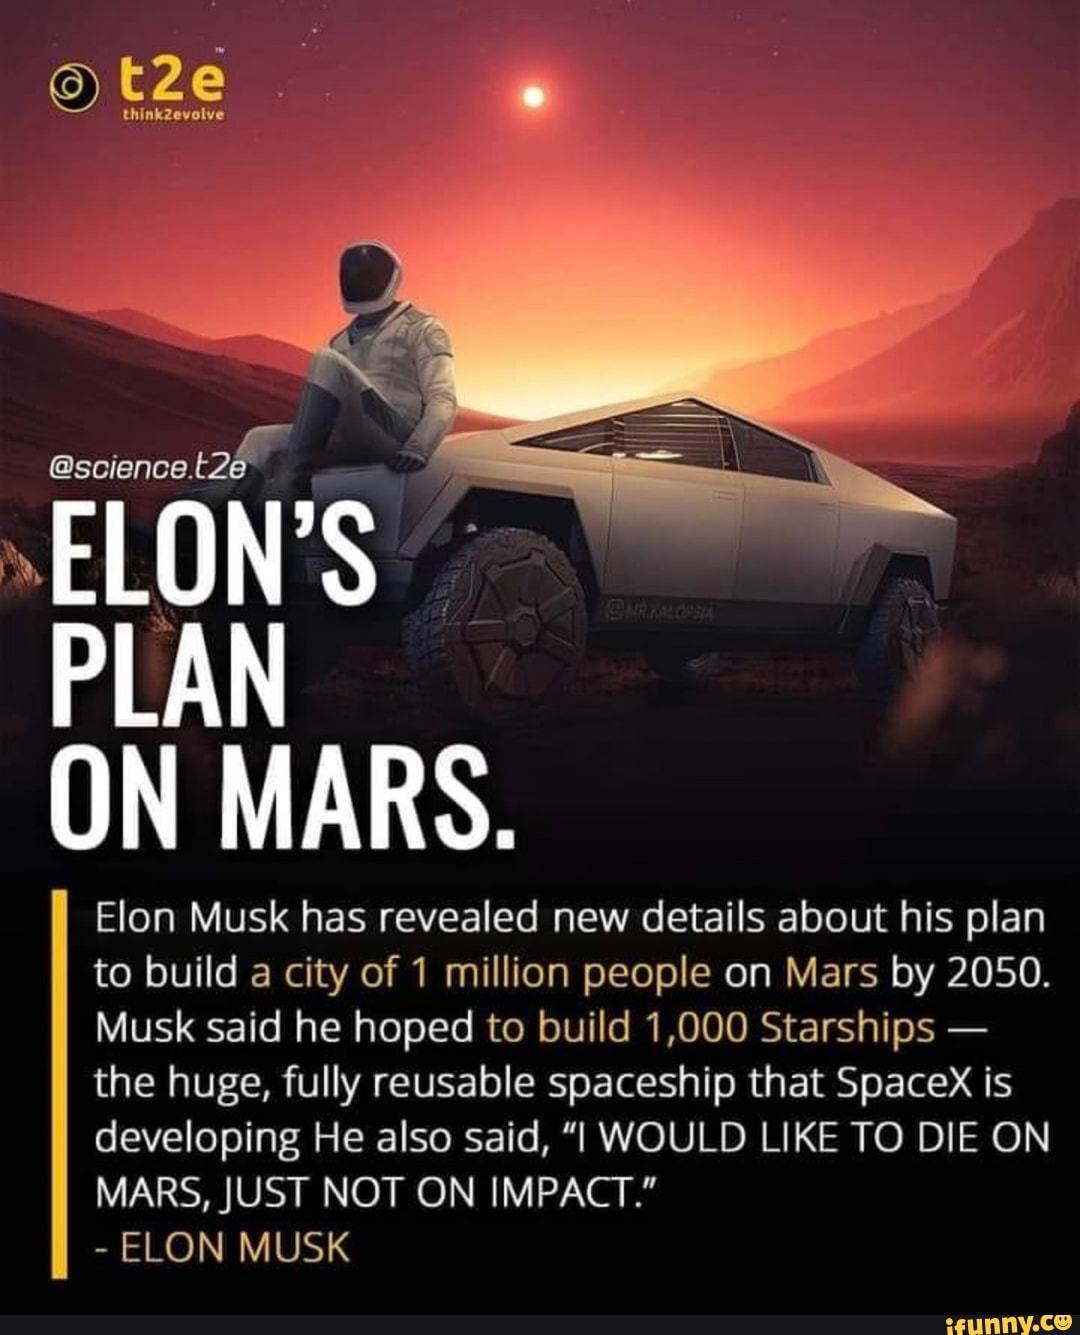 ThinkZevolve science. "ELON'S PLAN ON MARS. Elon Musk has revealed new